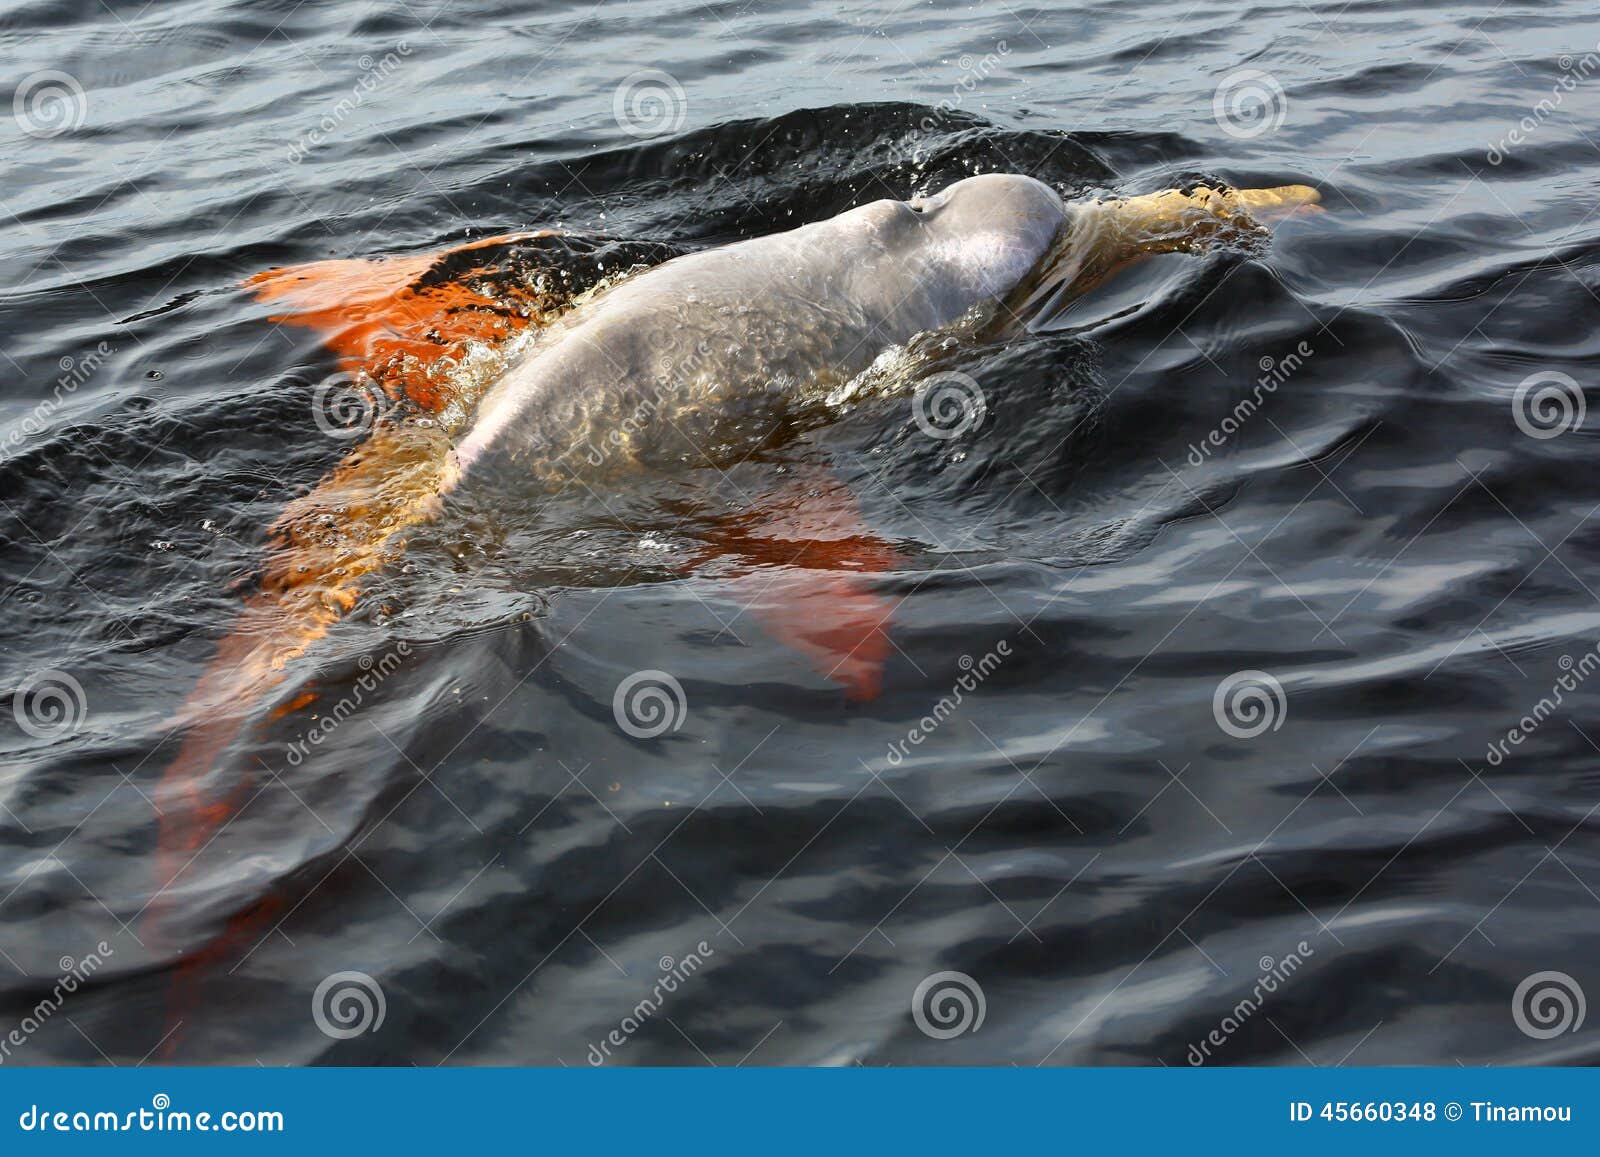 boto dolphin in dark waters of rio negro